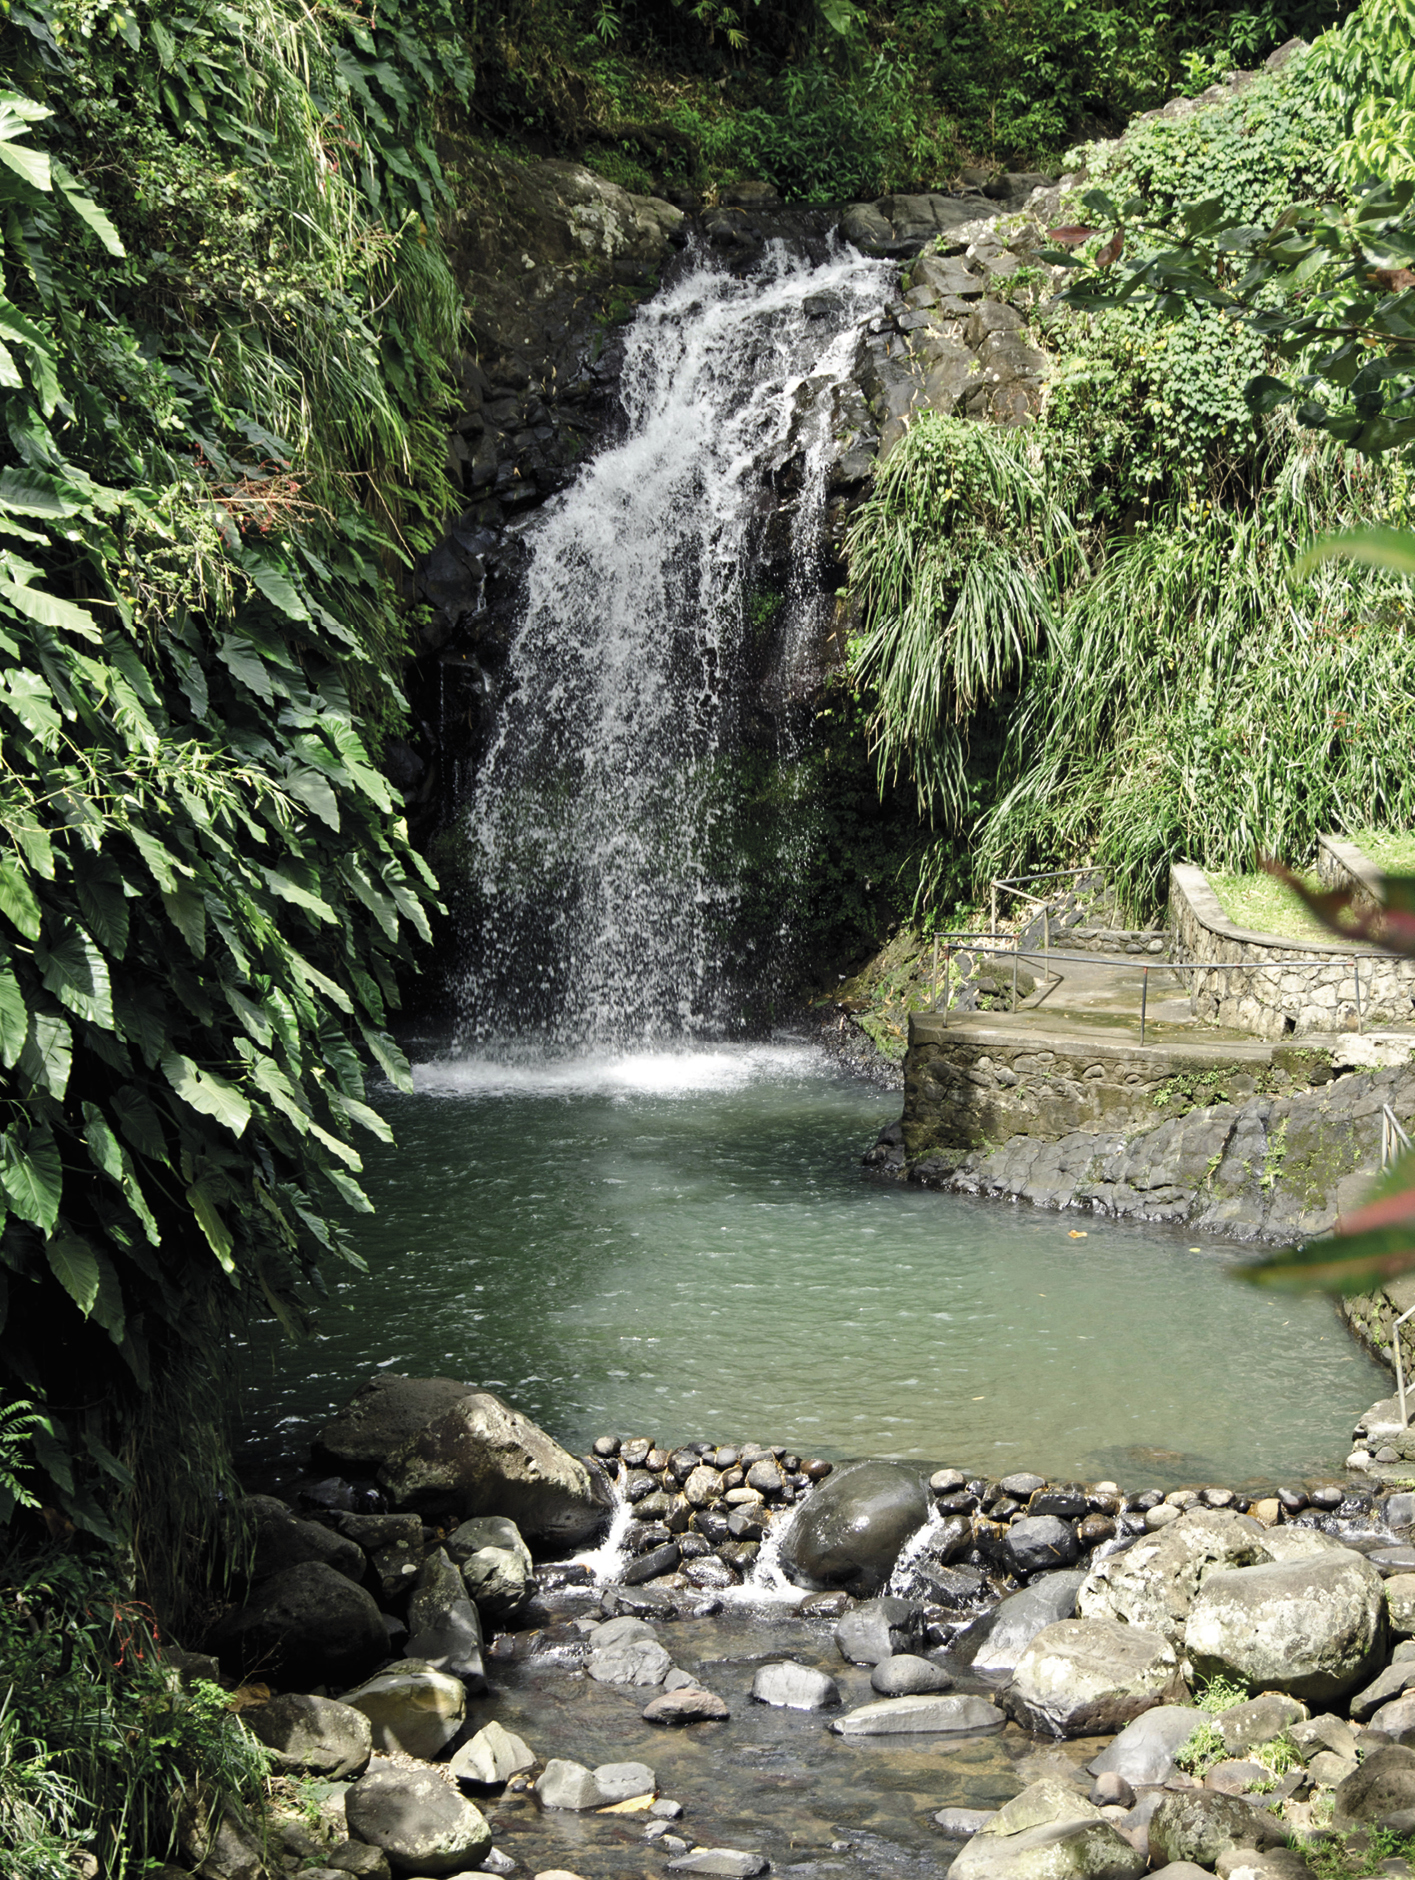 One of Grenada’s many dramatic waterfalls